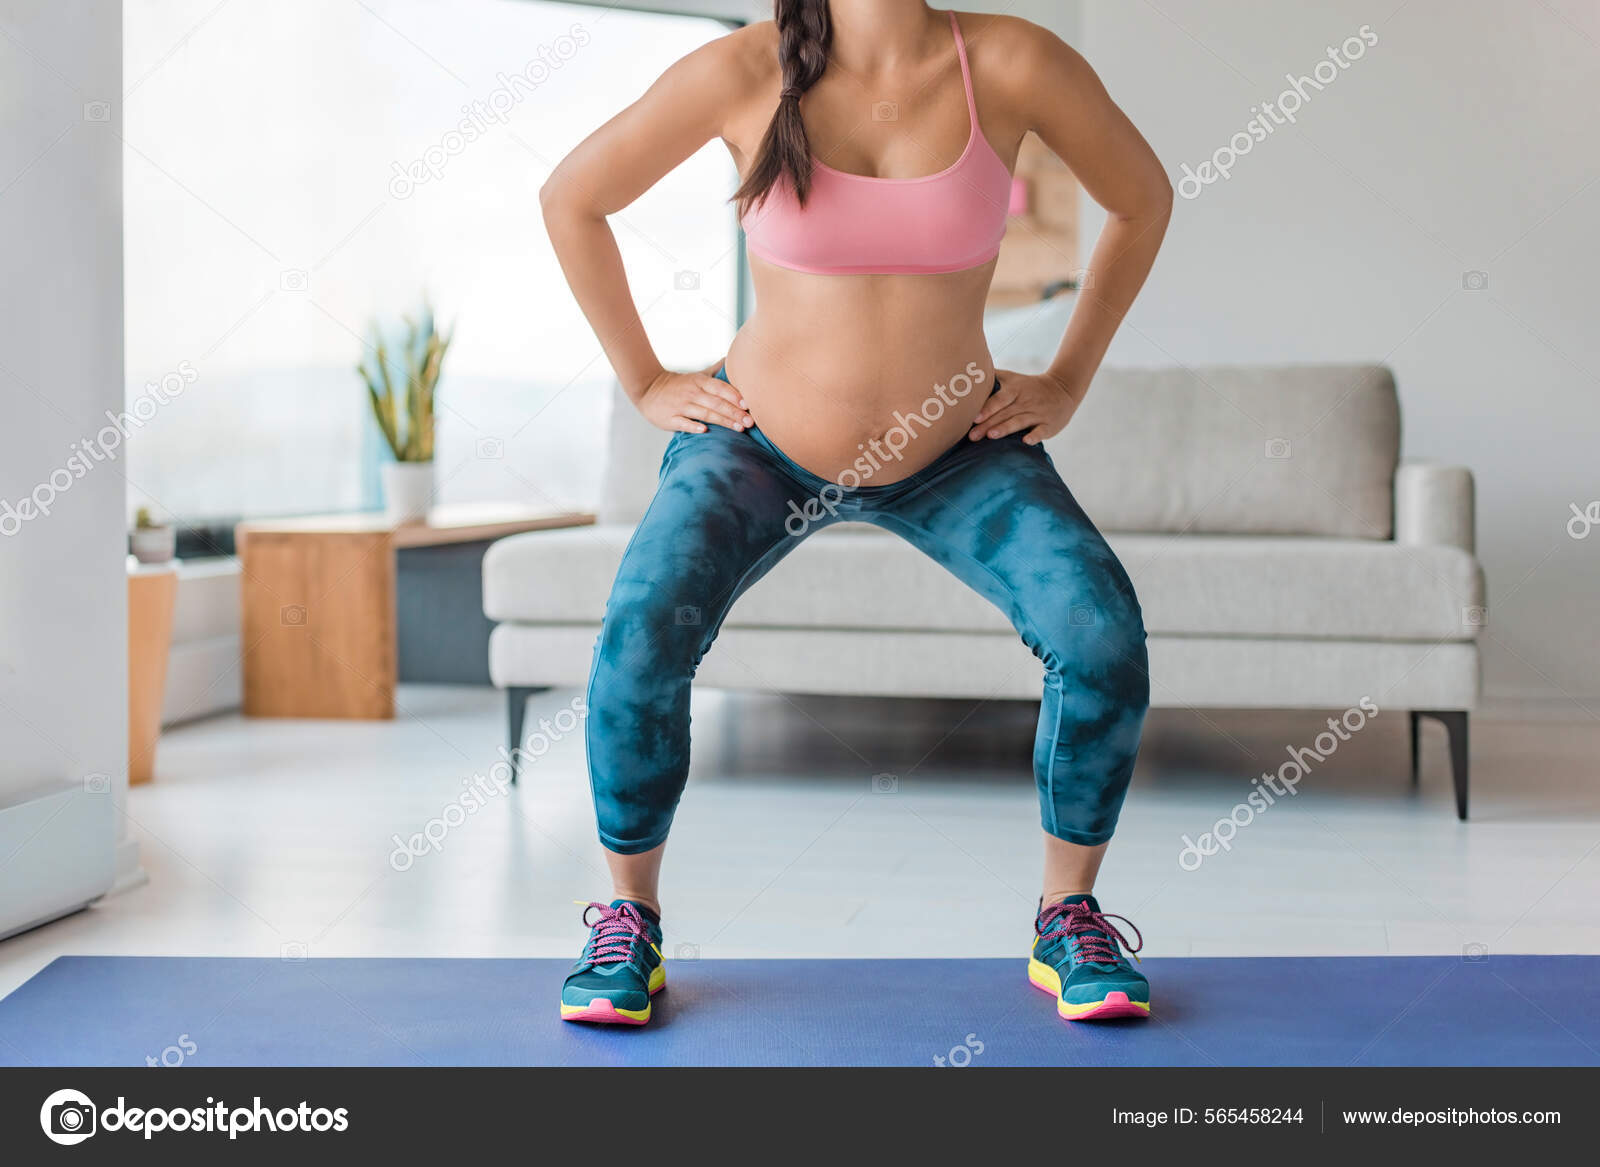 https://st.depositphotos.com/2069237/56545/i/1600/depositphotos_565458244-stock-photo-home-workout-pregnant-woman-squatting.jpg